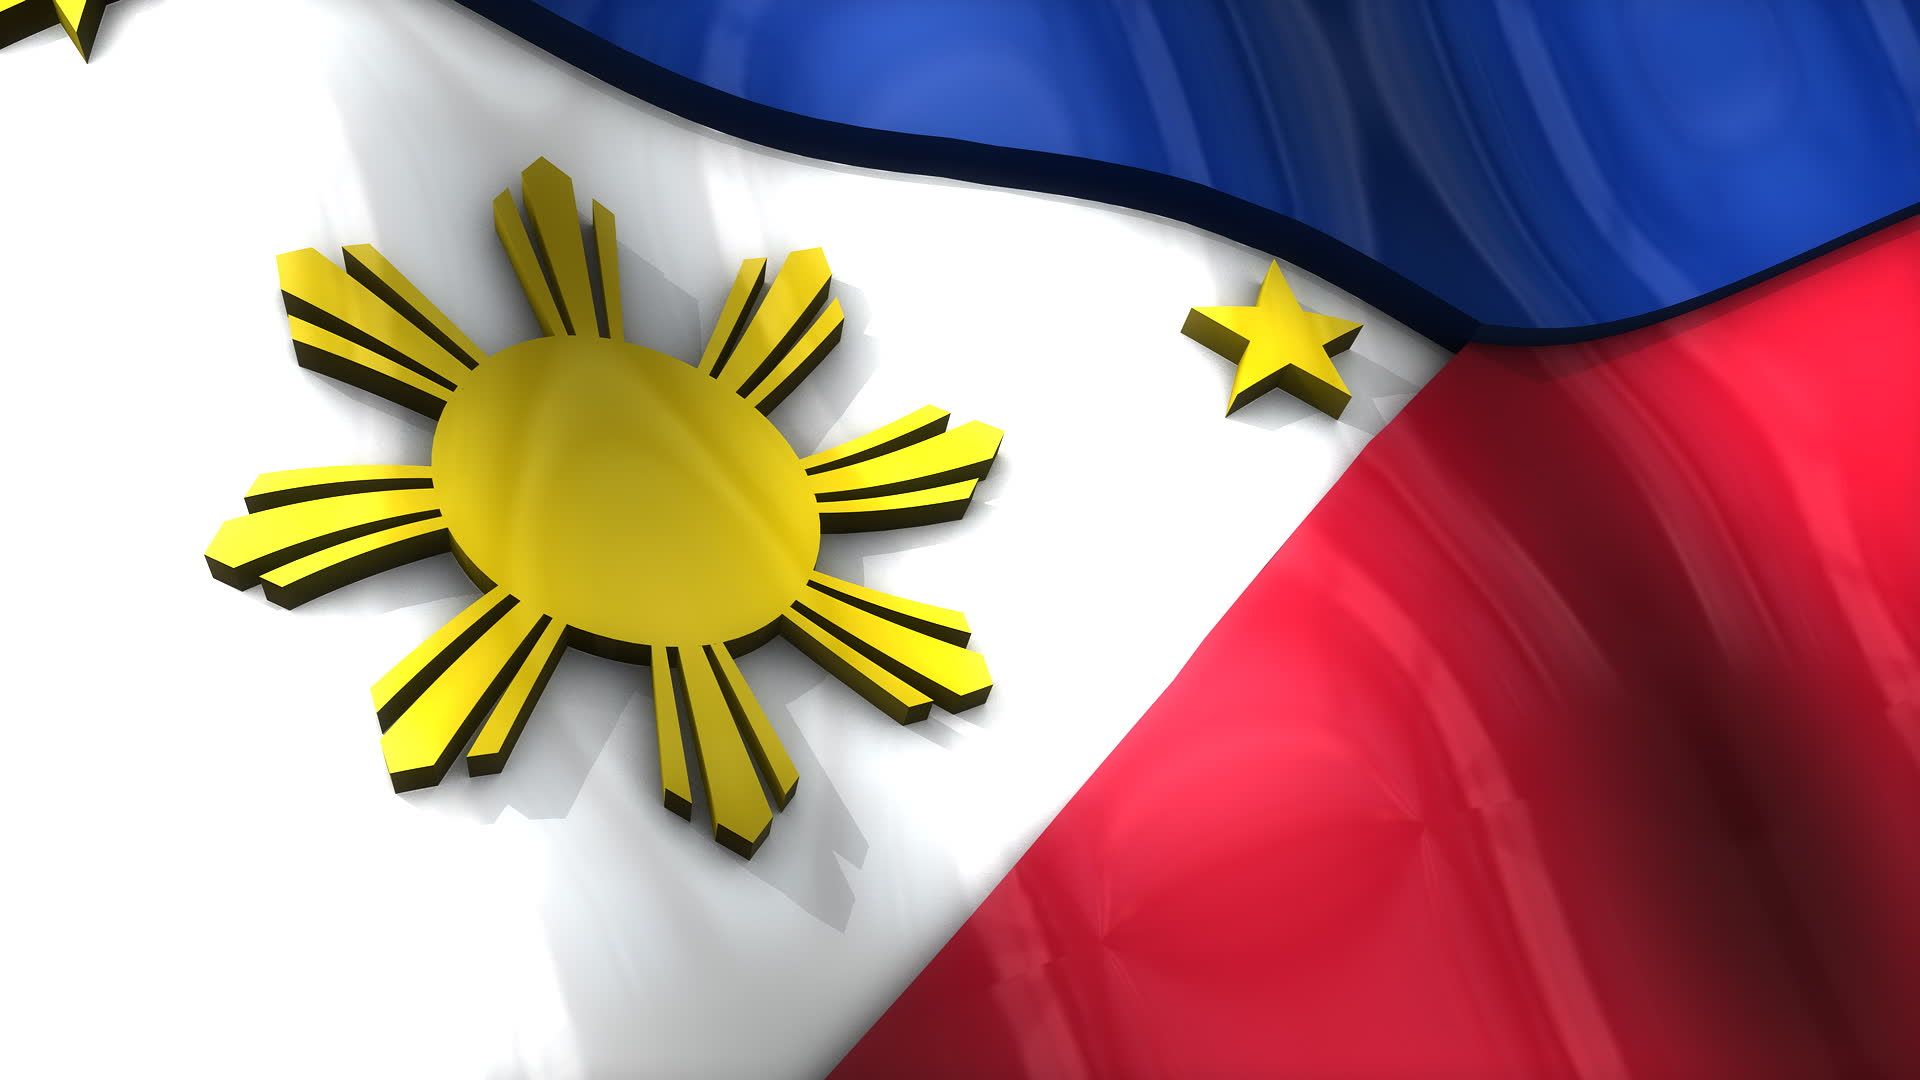 Philippines Flag Wallpaper. Philippine flag wallpaper, Philippine